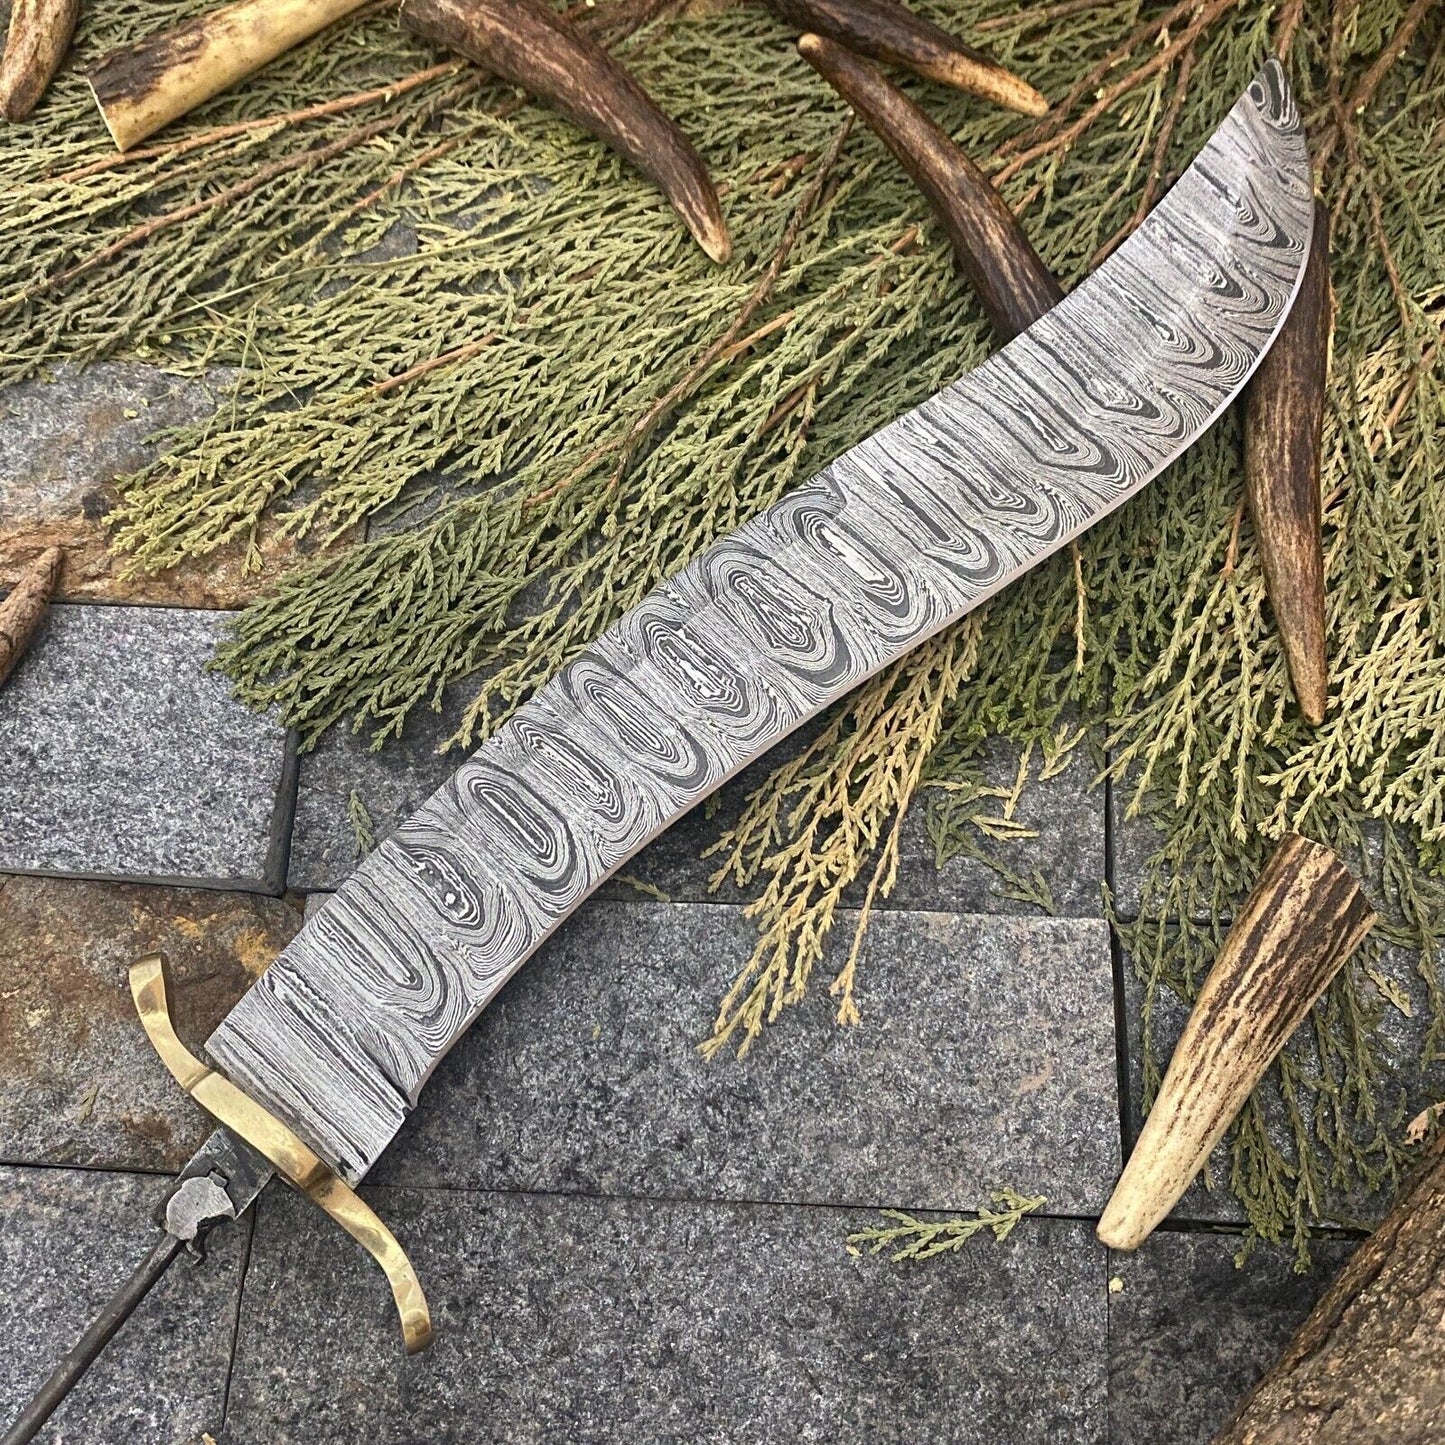 SHARDBLADE CUSTOM HAND FORGED DAMASCUS STEEL KUKRI Blank Blade Hunting Knife